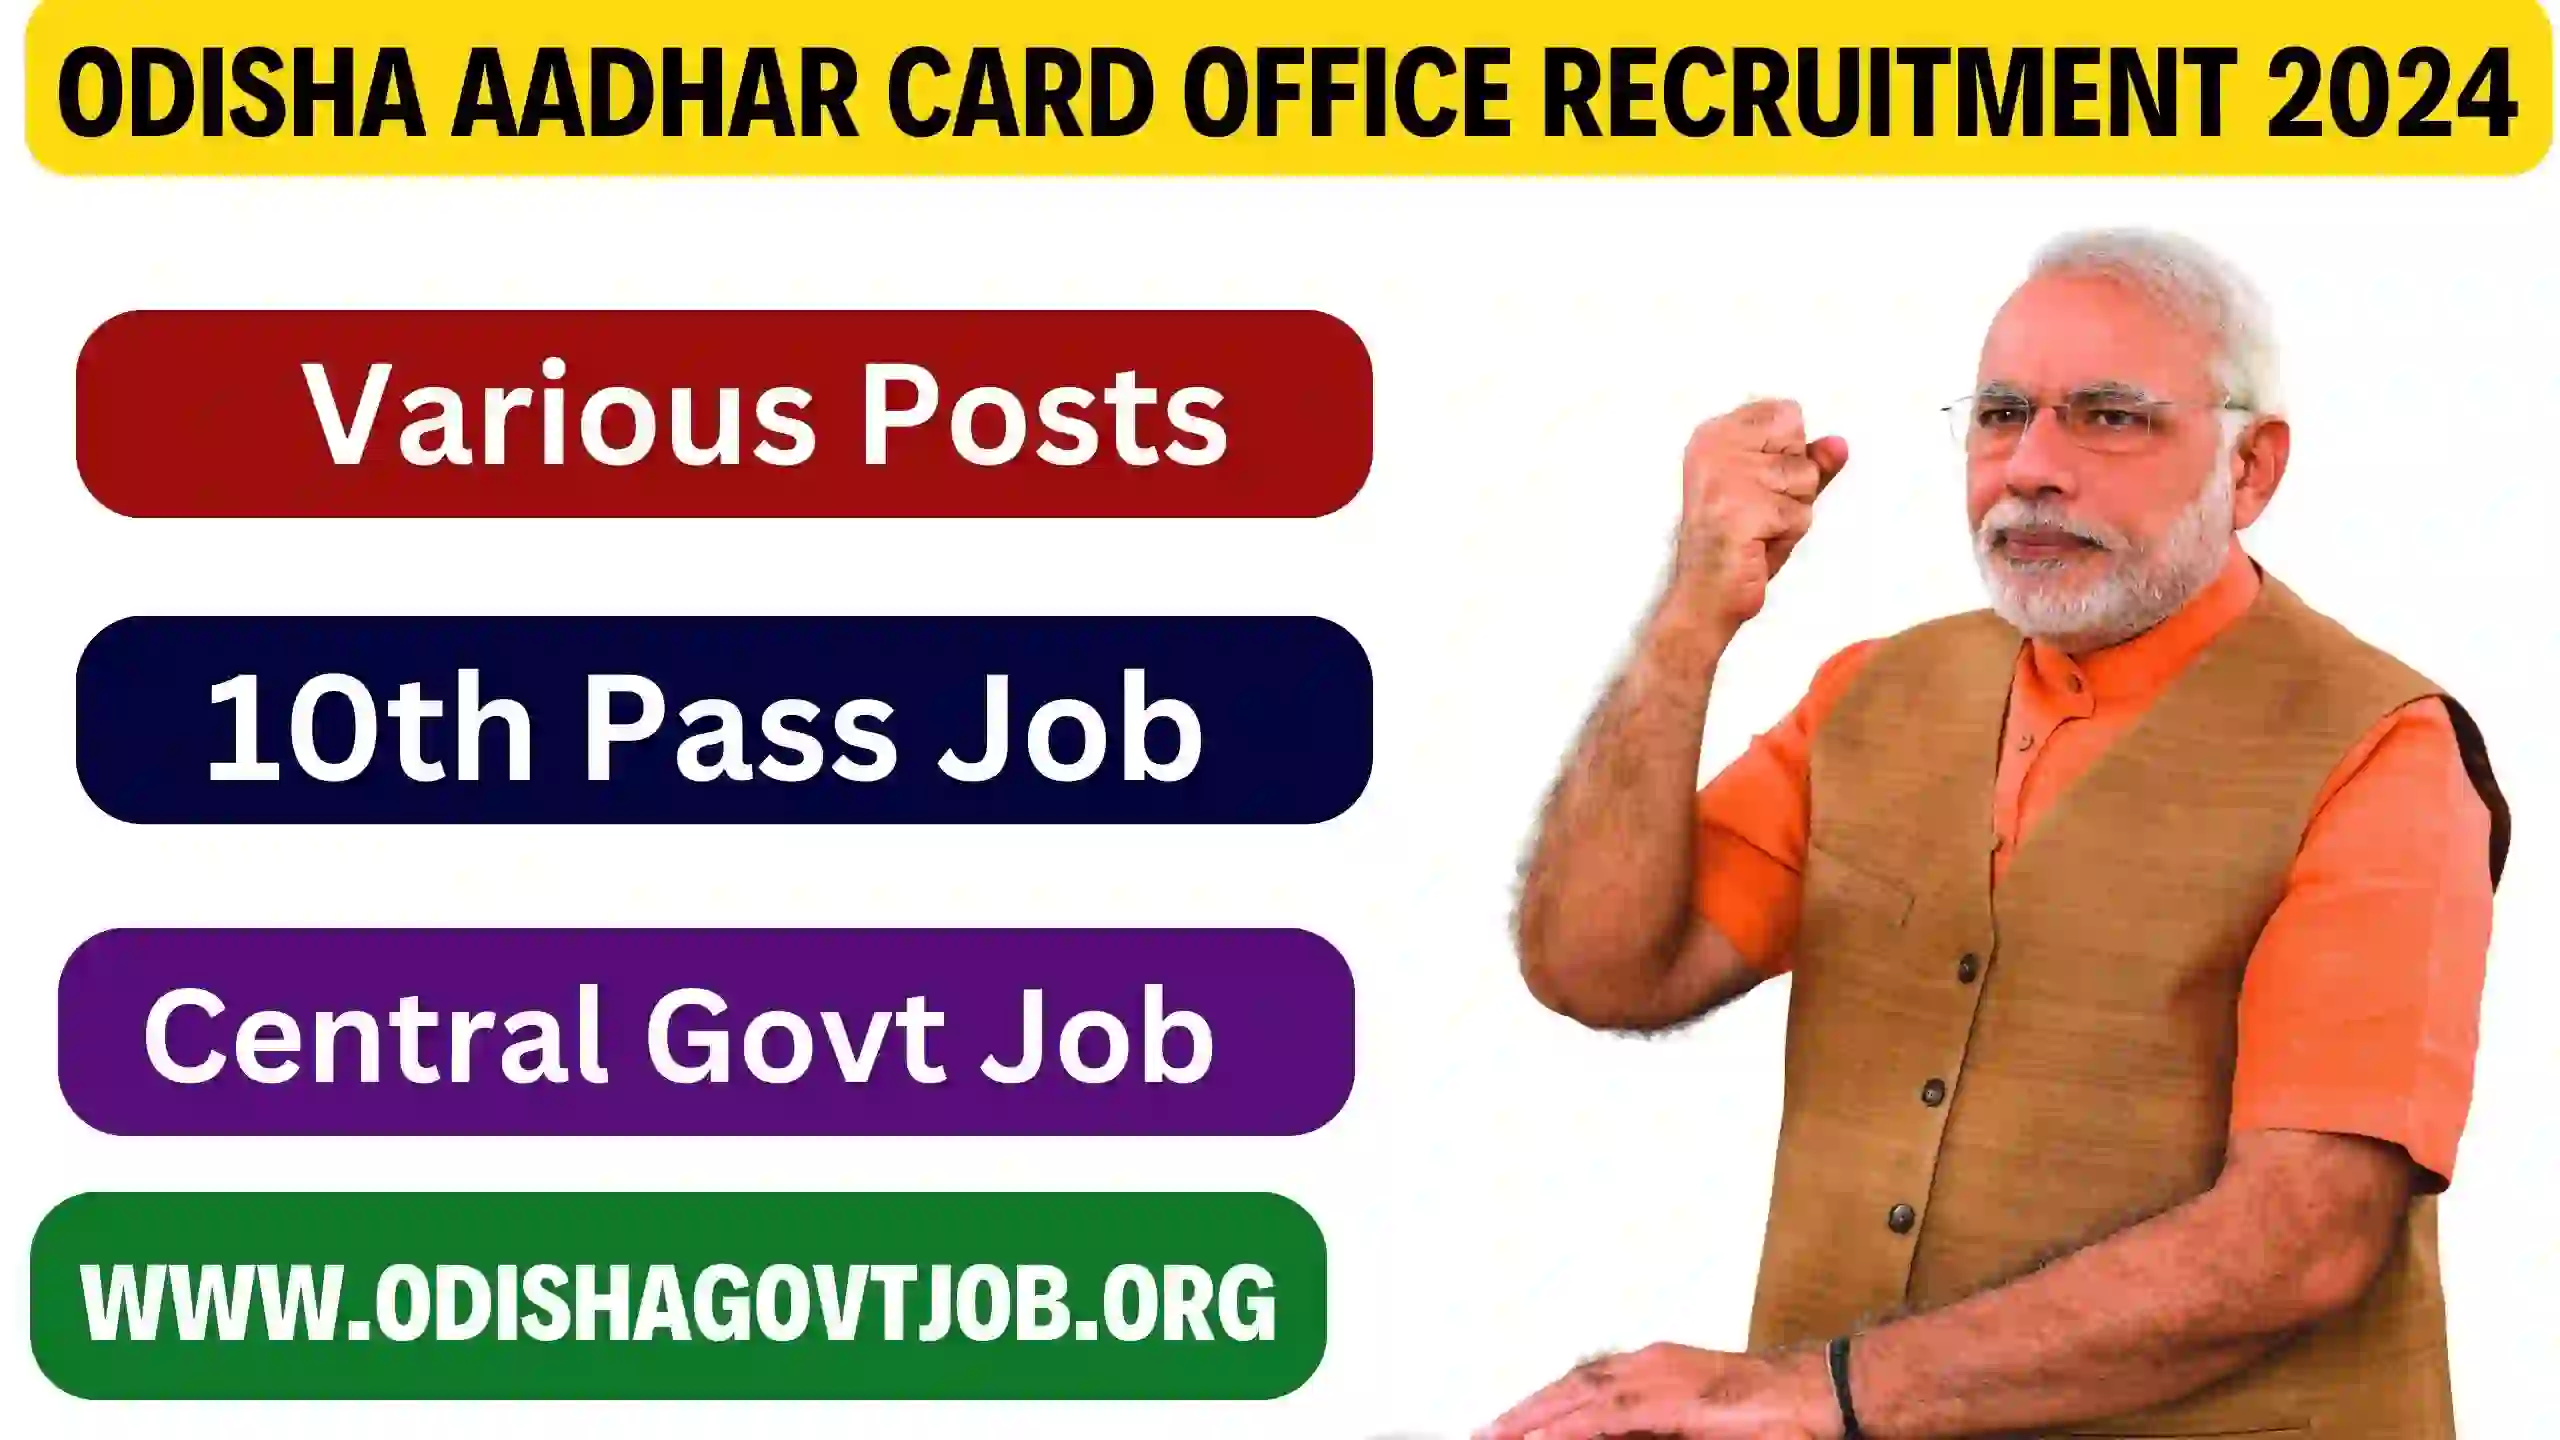 Odisha Aadhar Card Office Recruitment 2024